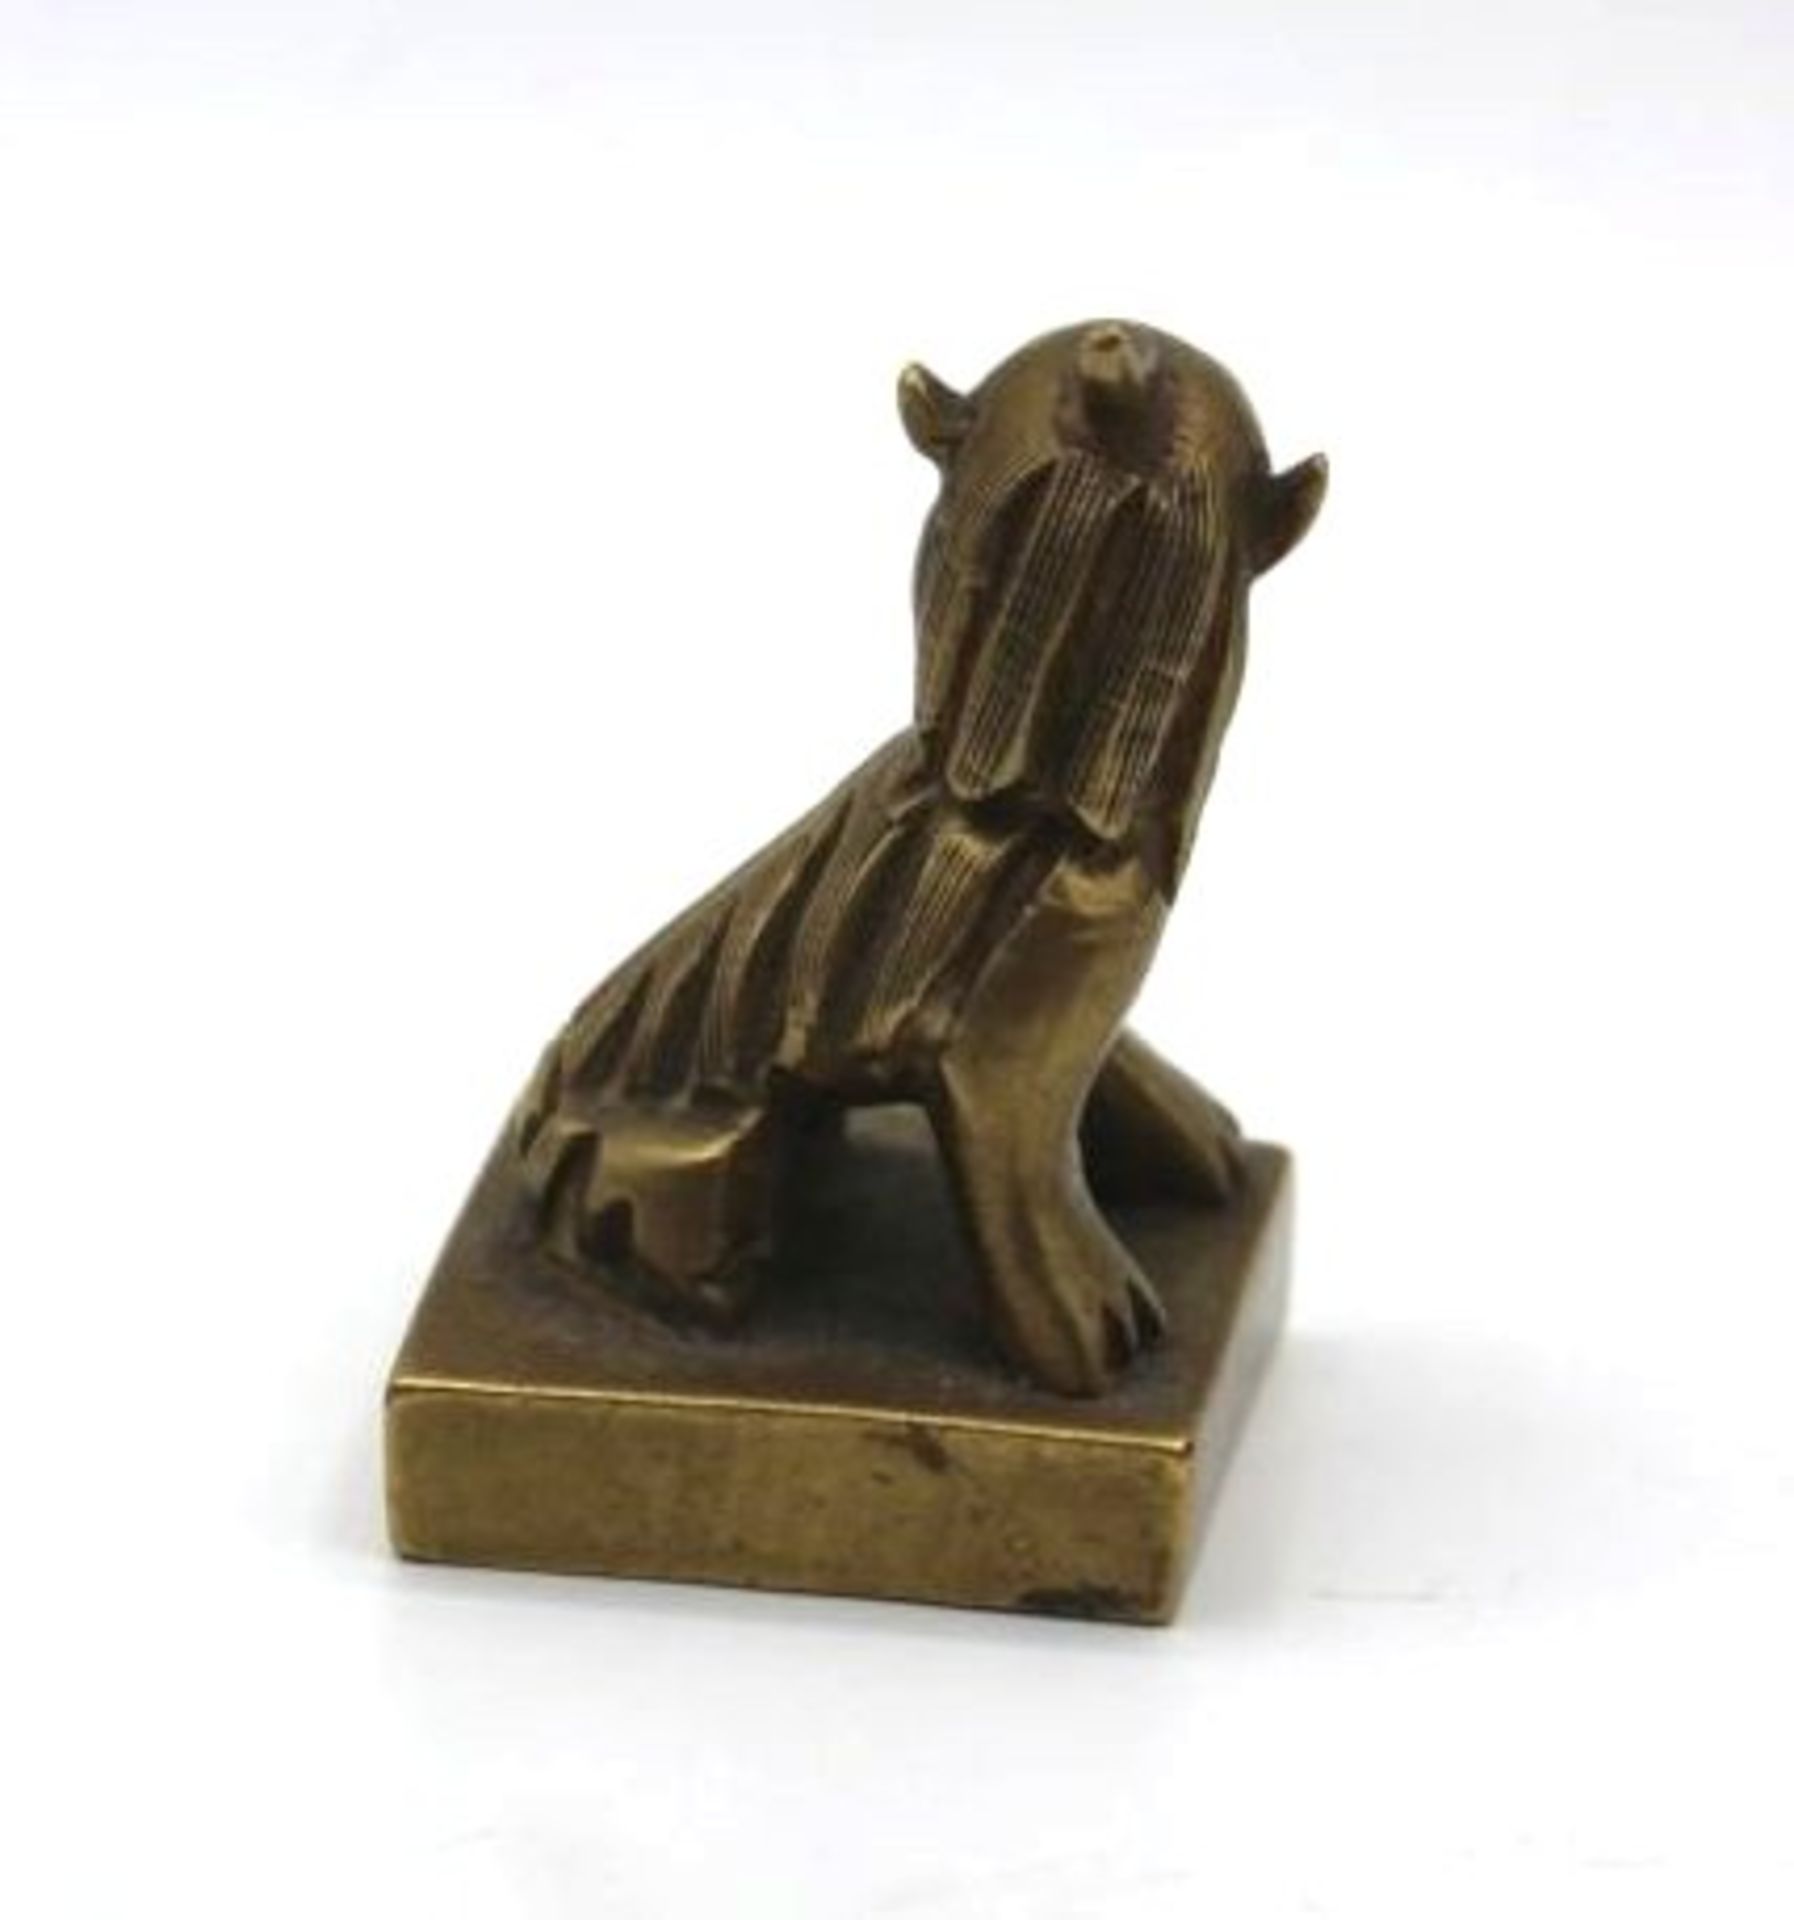 Petschaft, wohl Bronze, China, Tempelhund, H-5cm. - Bild 2 aus 3